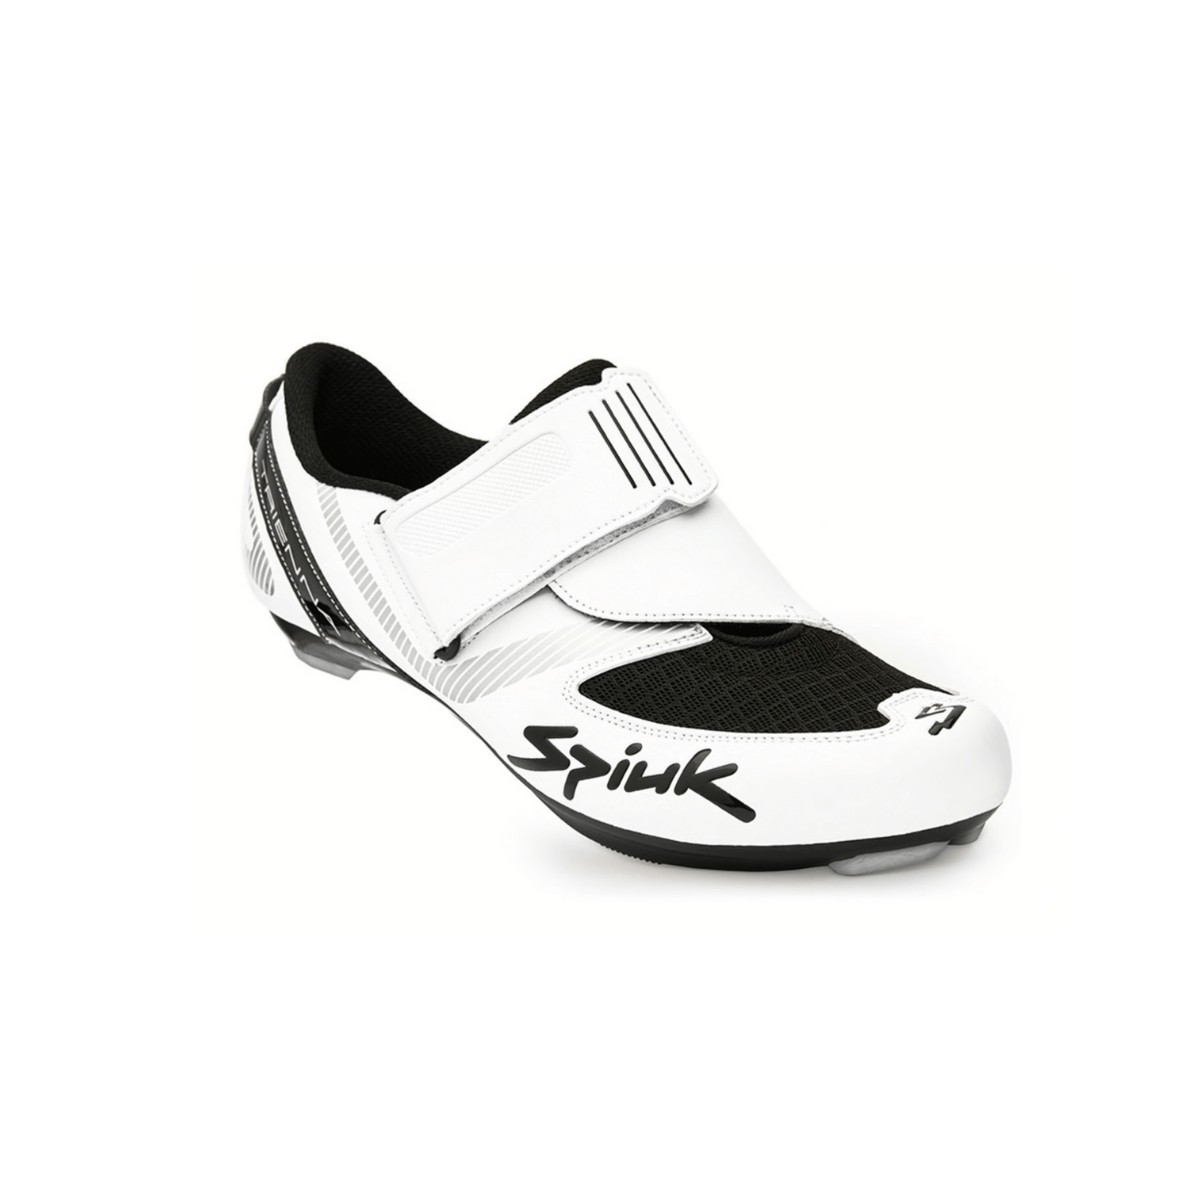 Spiuk Trienna Triathlon Carbon Matte White, Size 42 - EUR